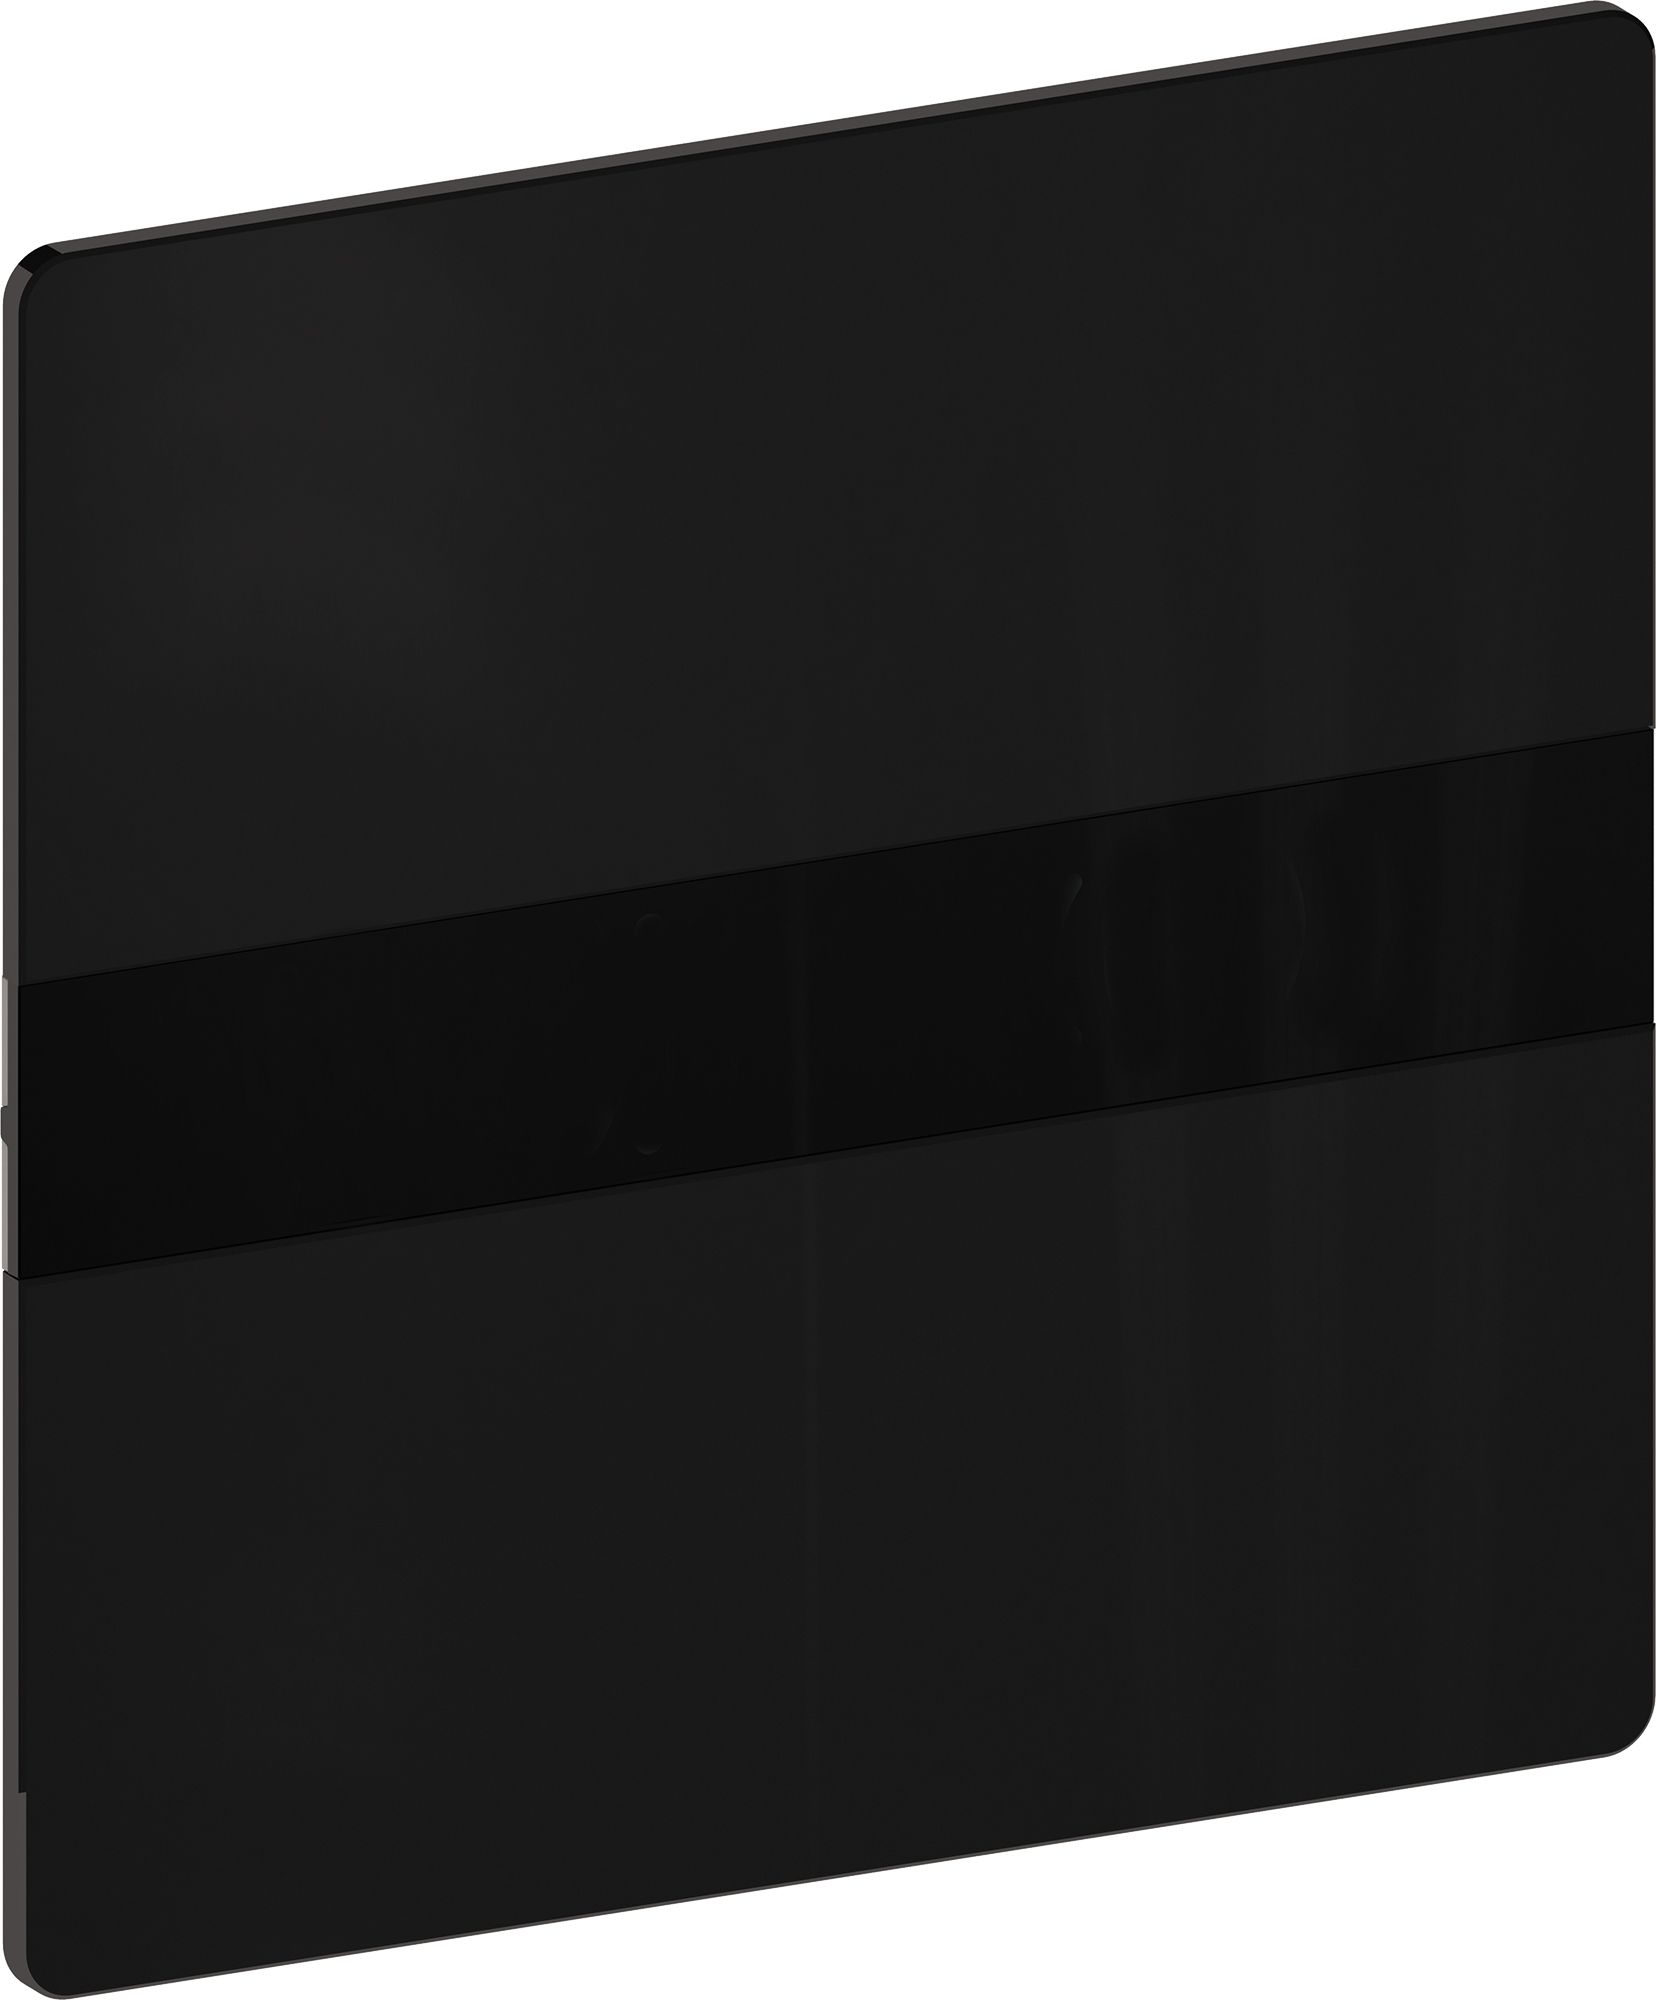 XS Control Panel EOS DF glass black